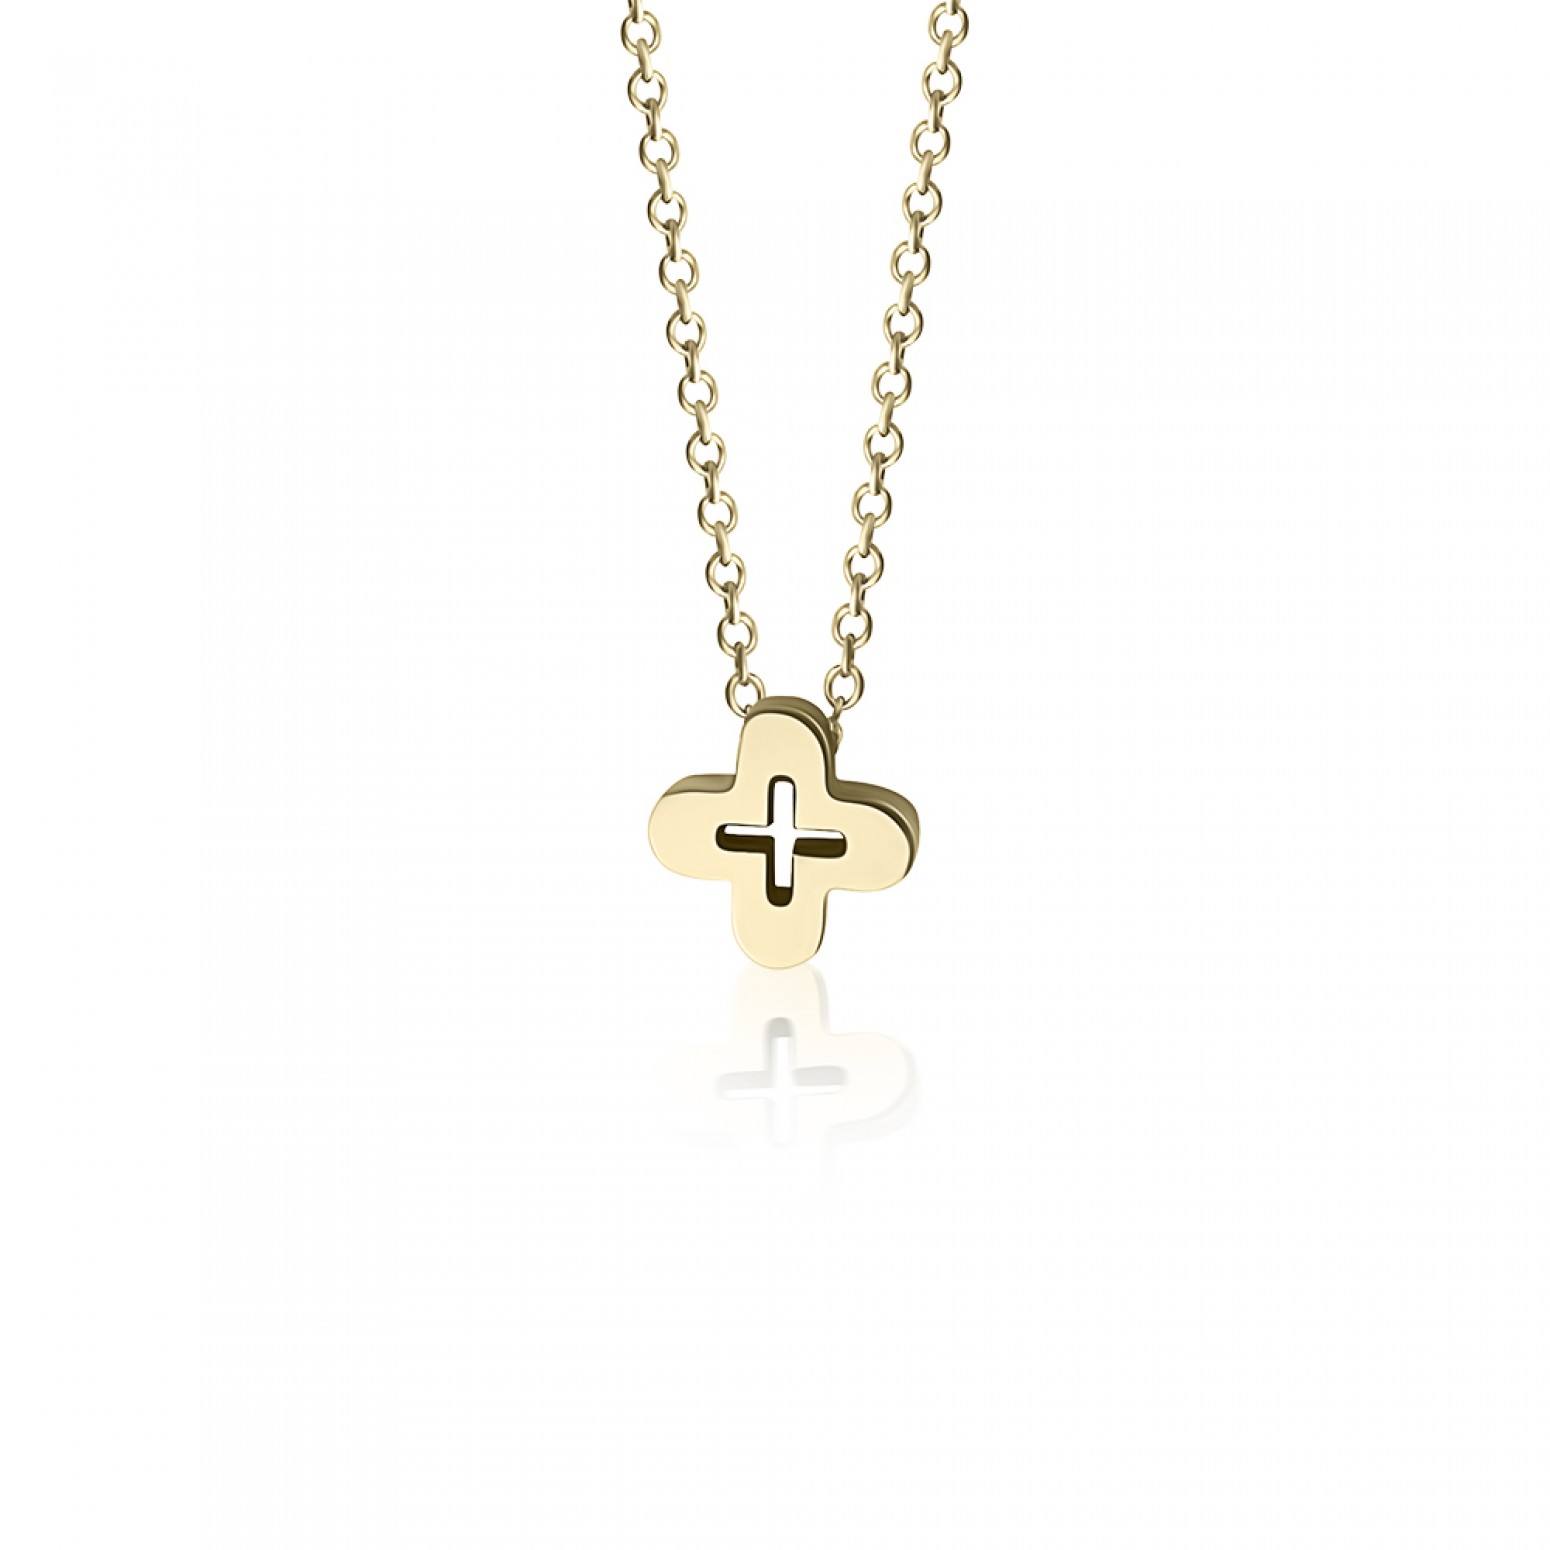 Cross necklace, Κ14 gold, ko5619 NECKLACES Κοσμηματα - chrilia.gr